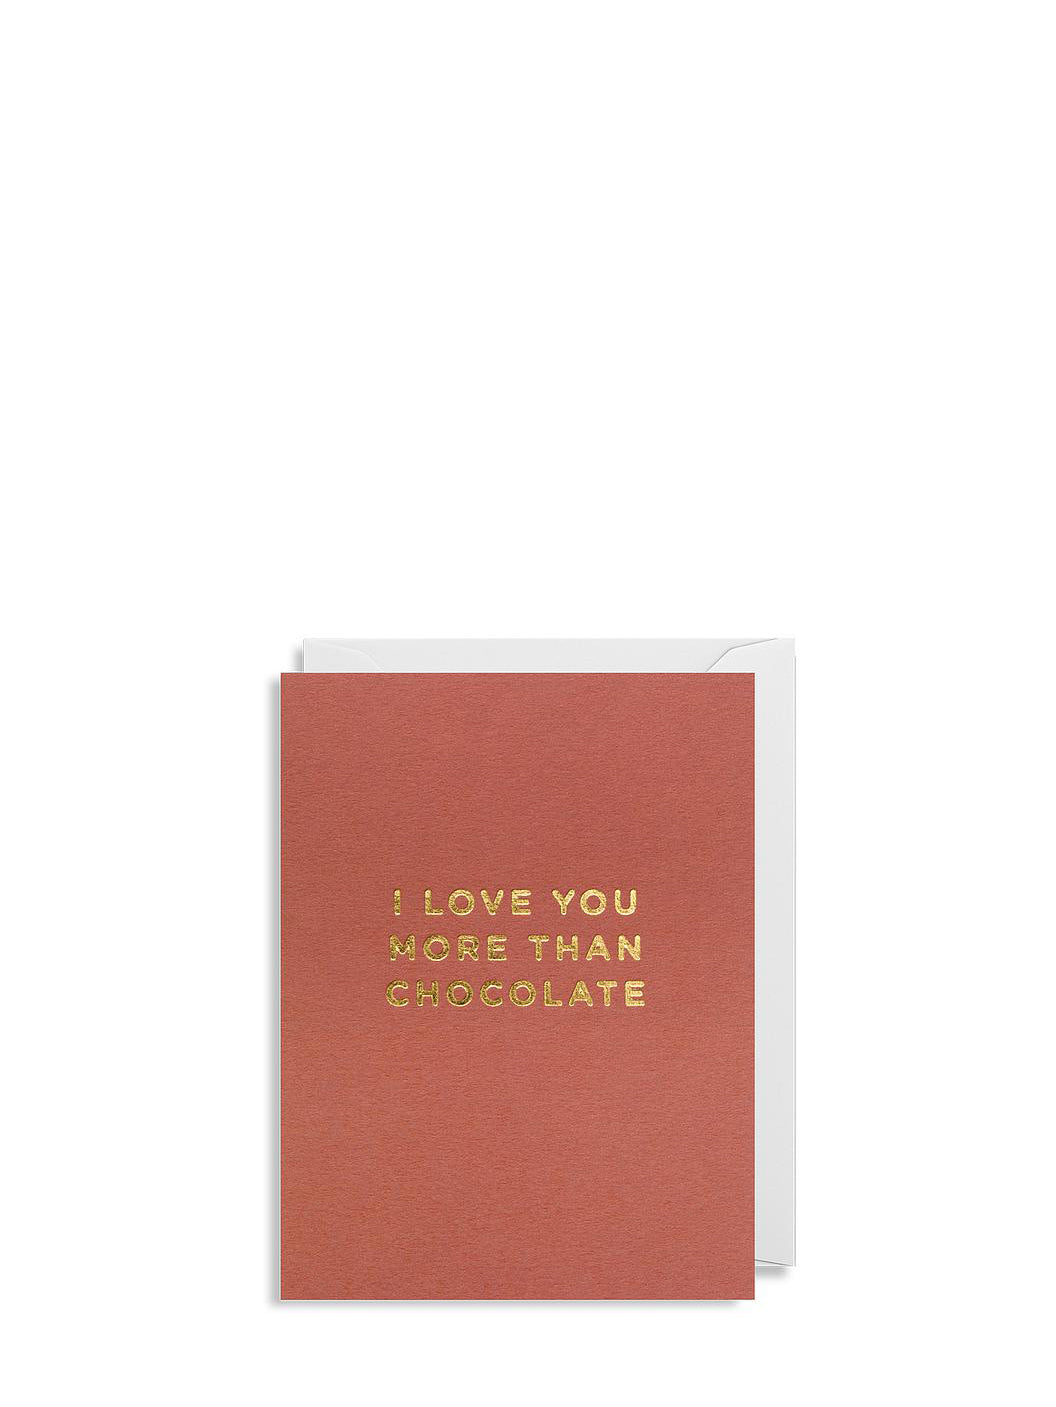 ´More than Chocolate' Mini greeting card